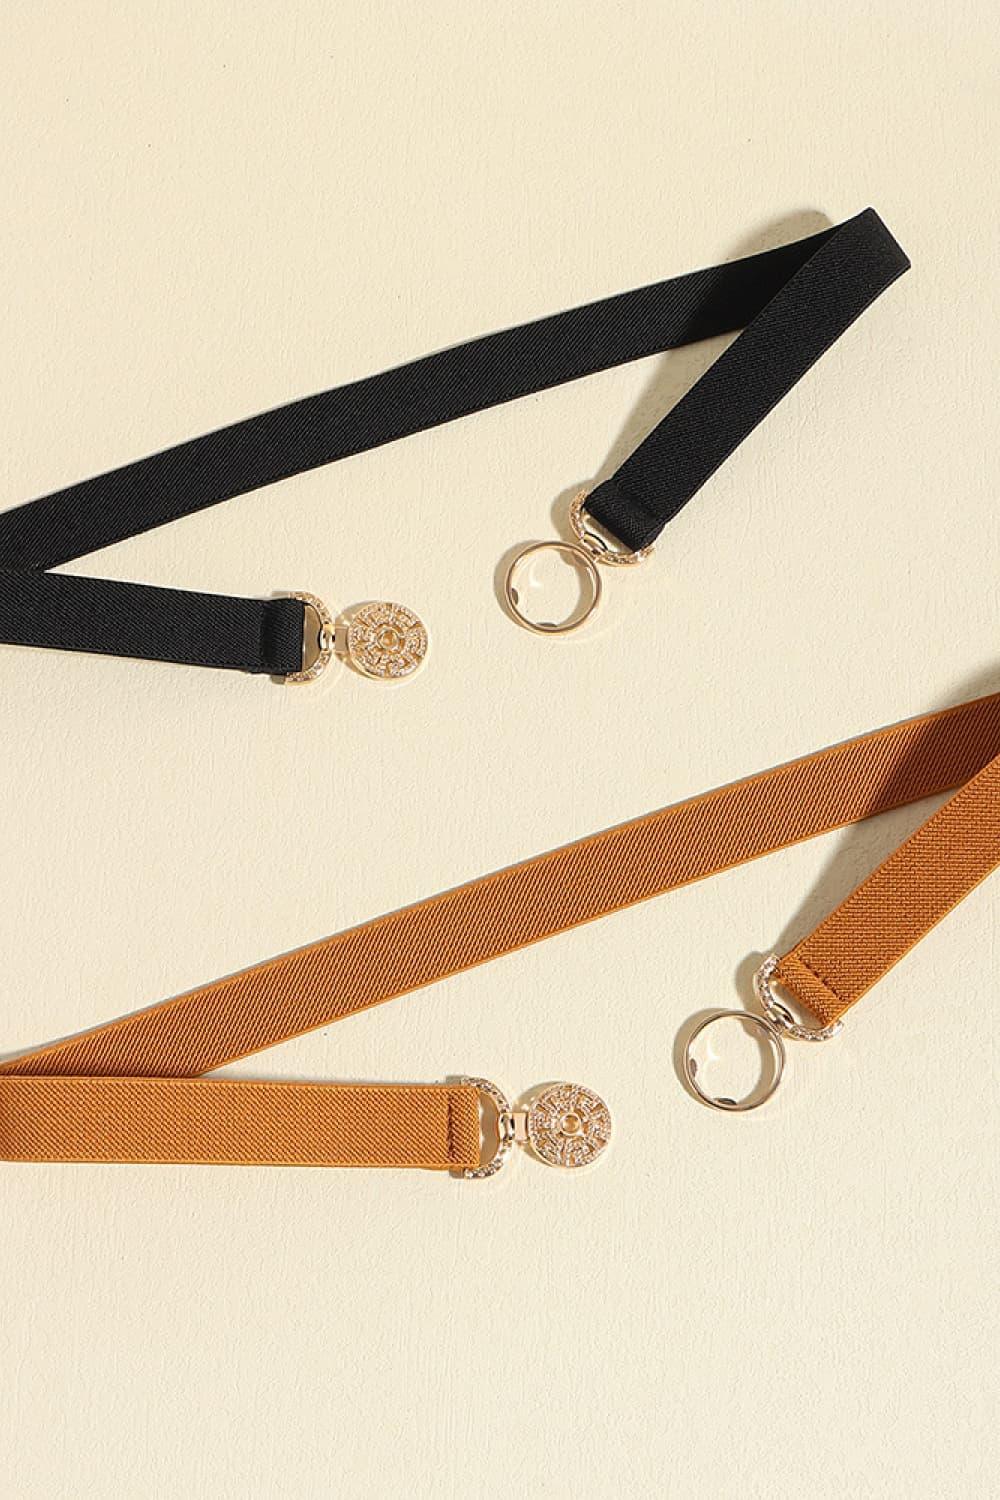 Secure Fit PU Leather Elastic Waist Belt - MXSTUDIO.COM